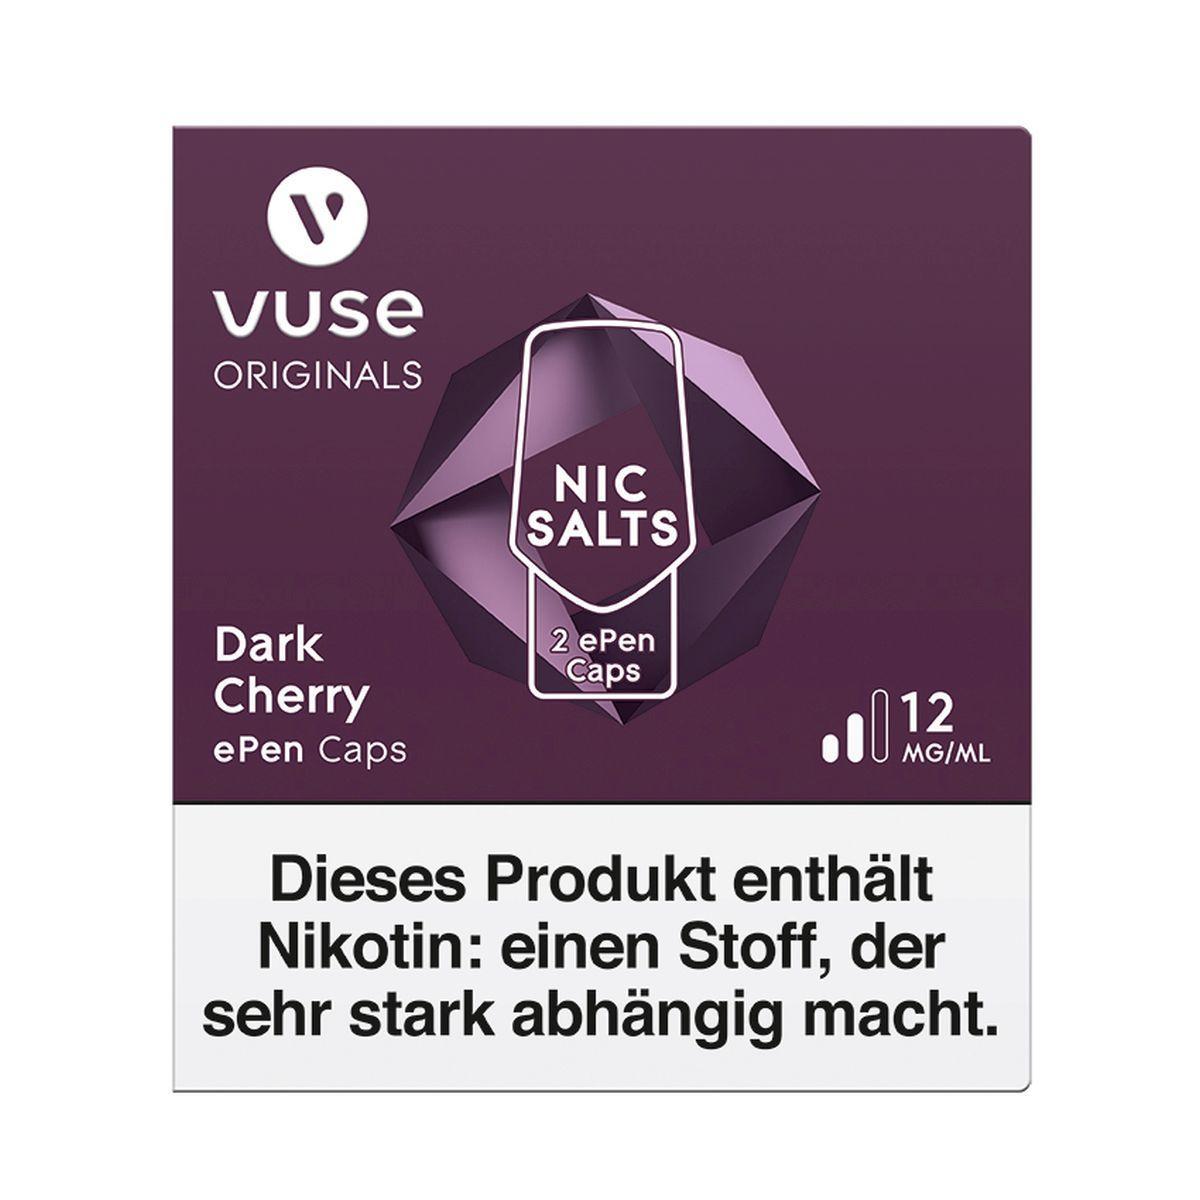 Vuse ePen Caps Dark Cherry Nicotin Salt 12mg/ml Nikotin